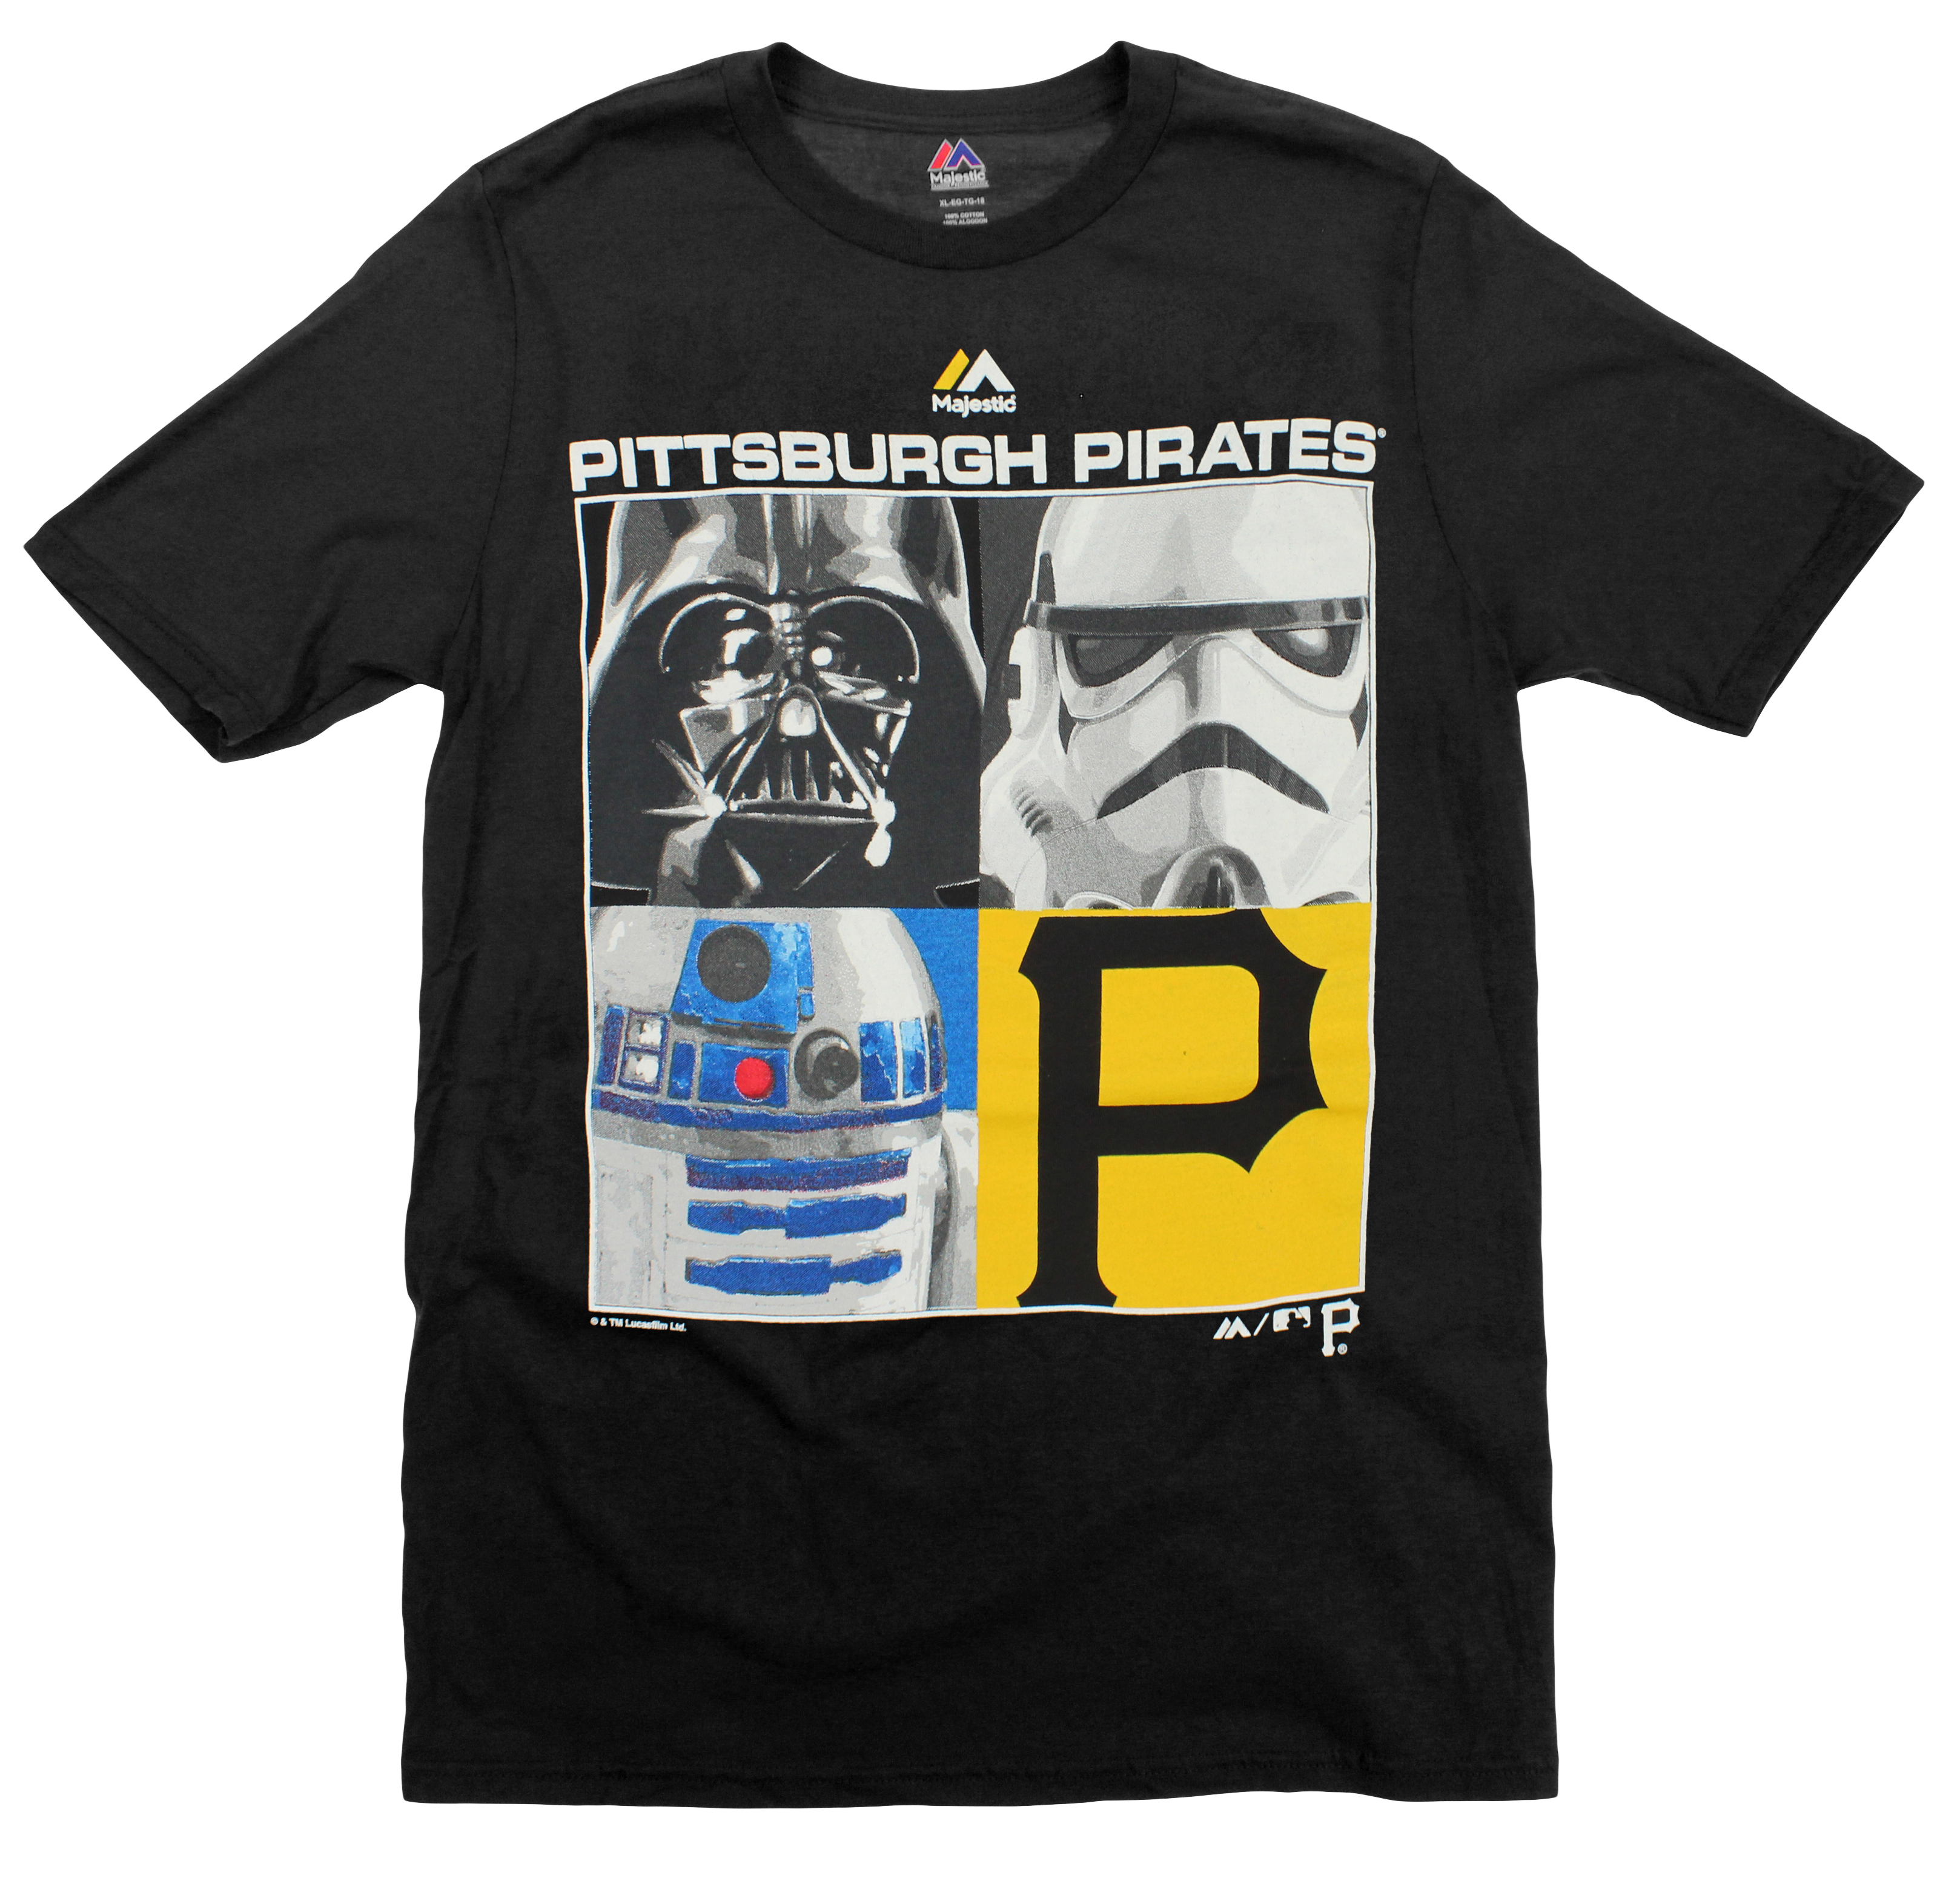 MLB Youth Pittsburgh Pirates Star Wars Main Character TShirt, Black eBay